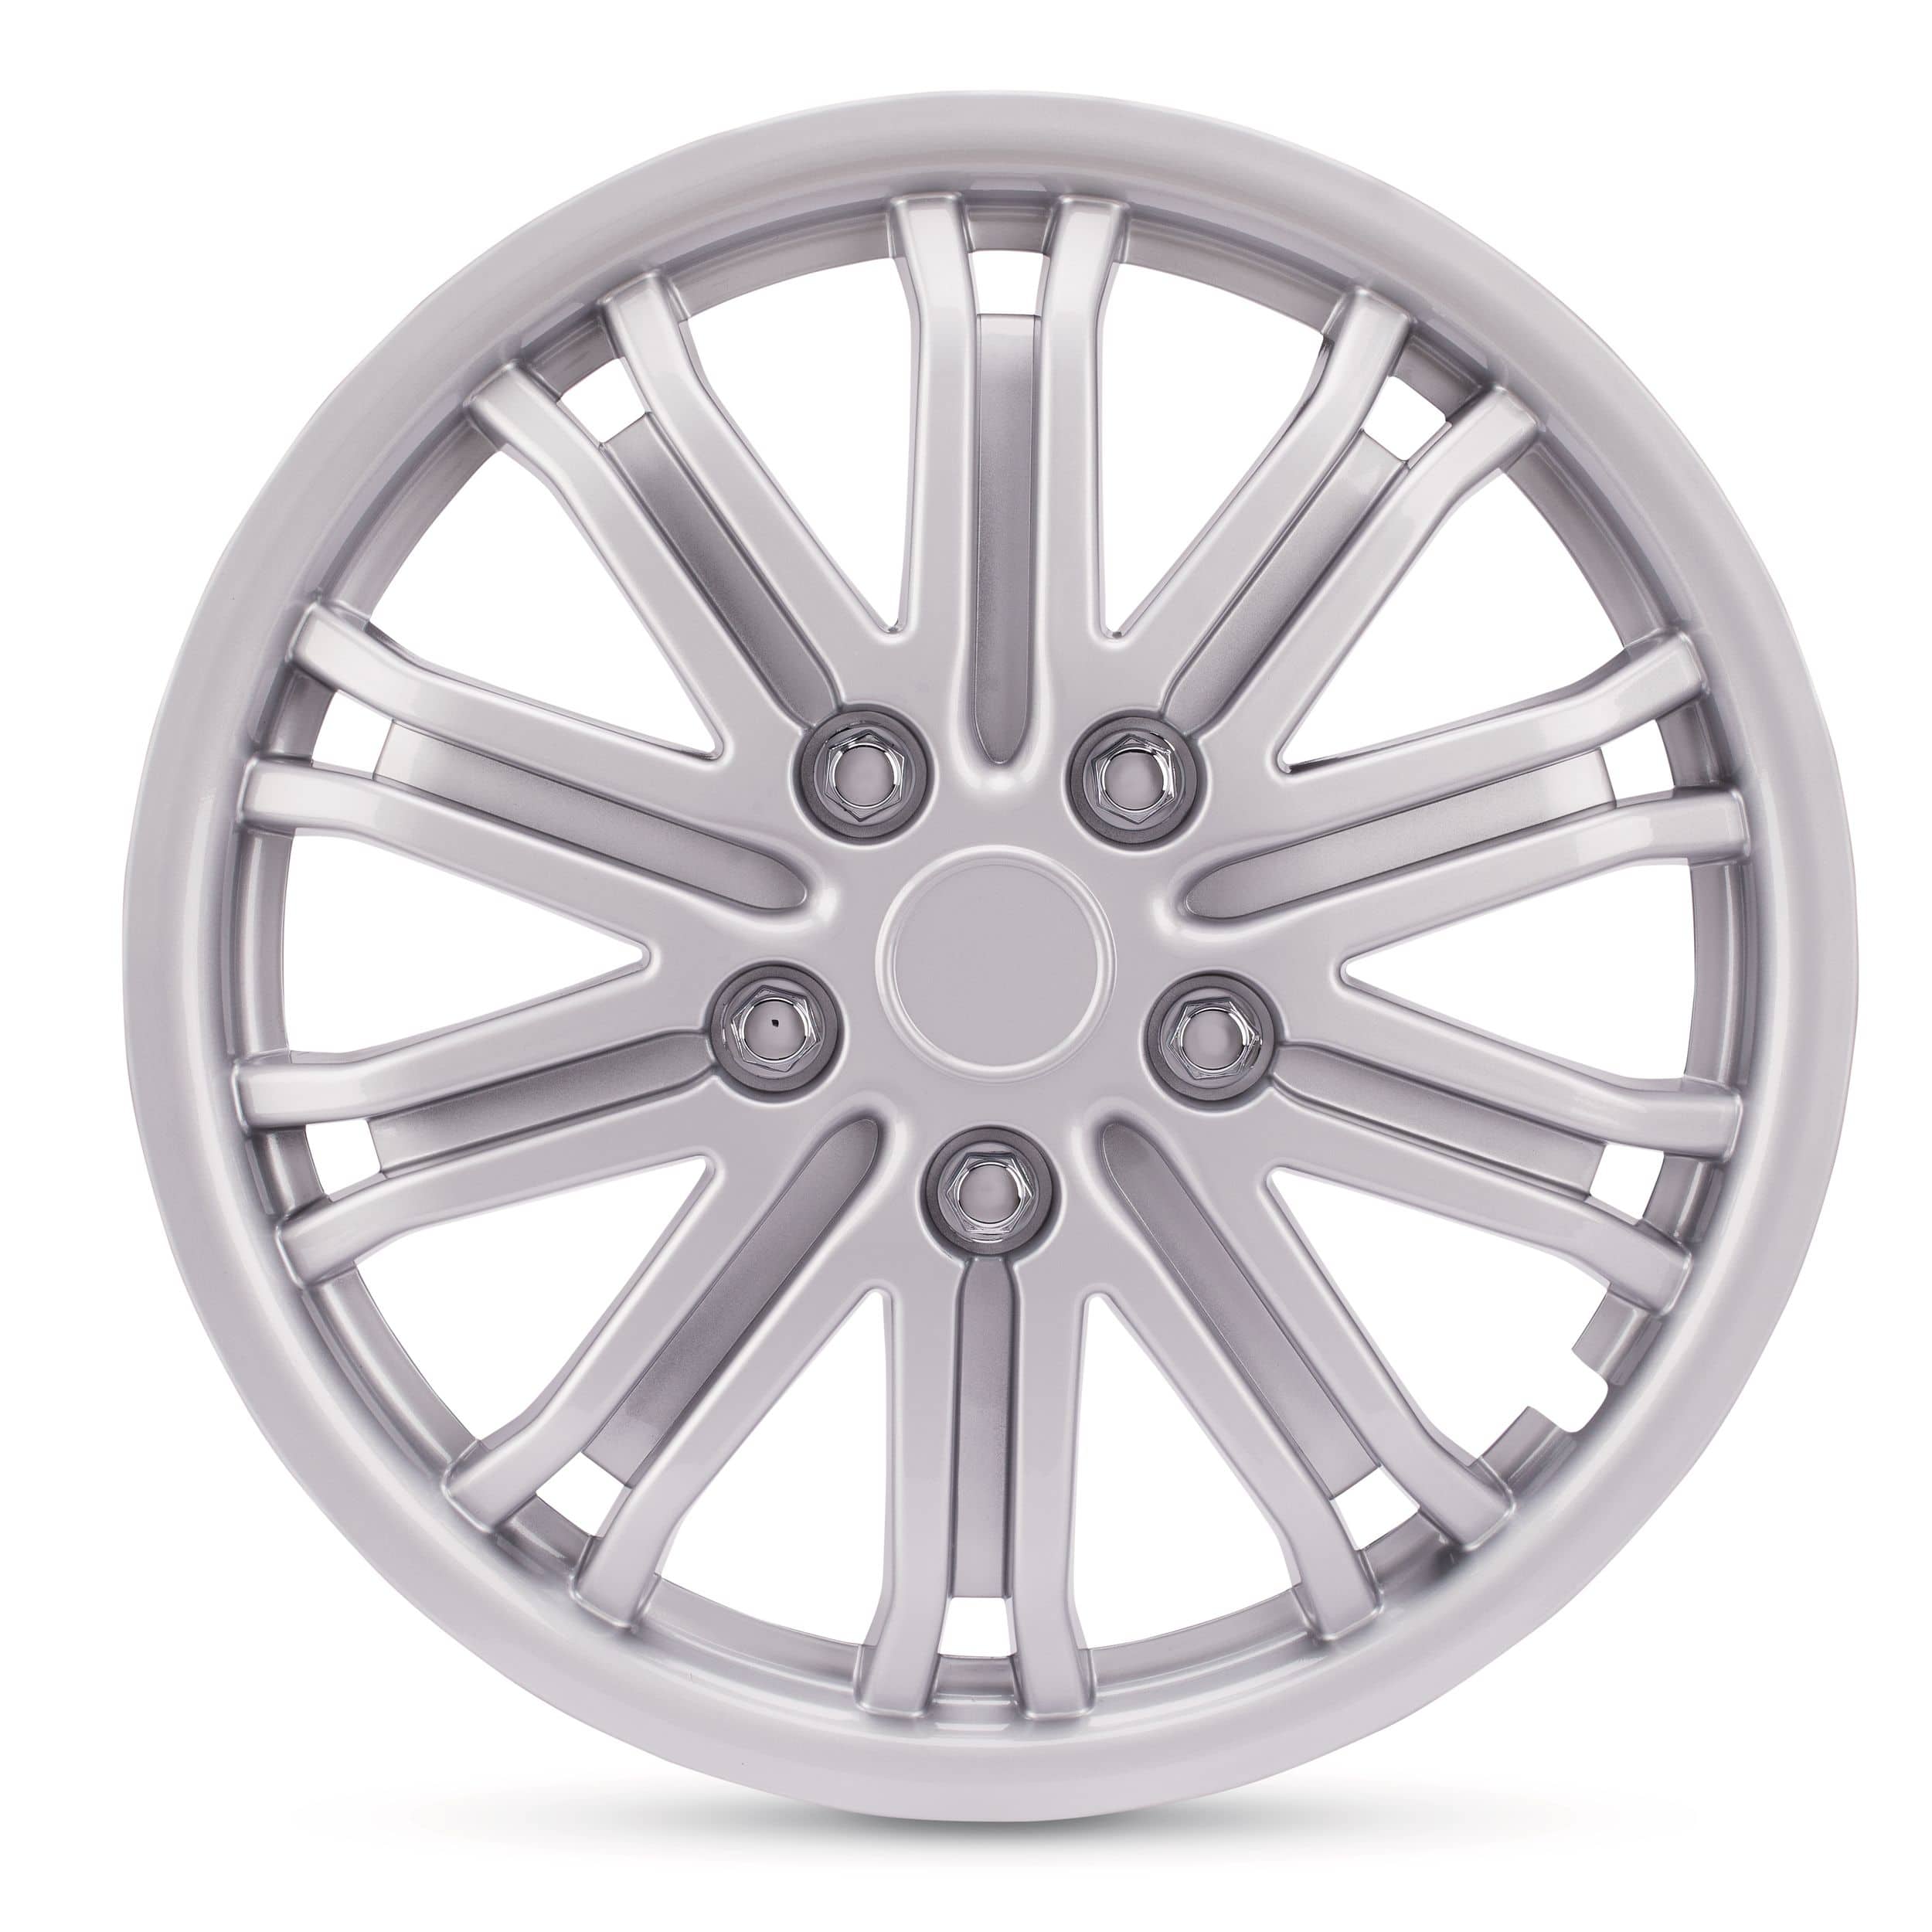 AutoTrends Wheel Cover, 1021, Gunmetal, 17-in, 4-pk